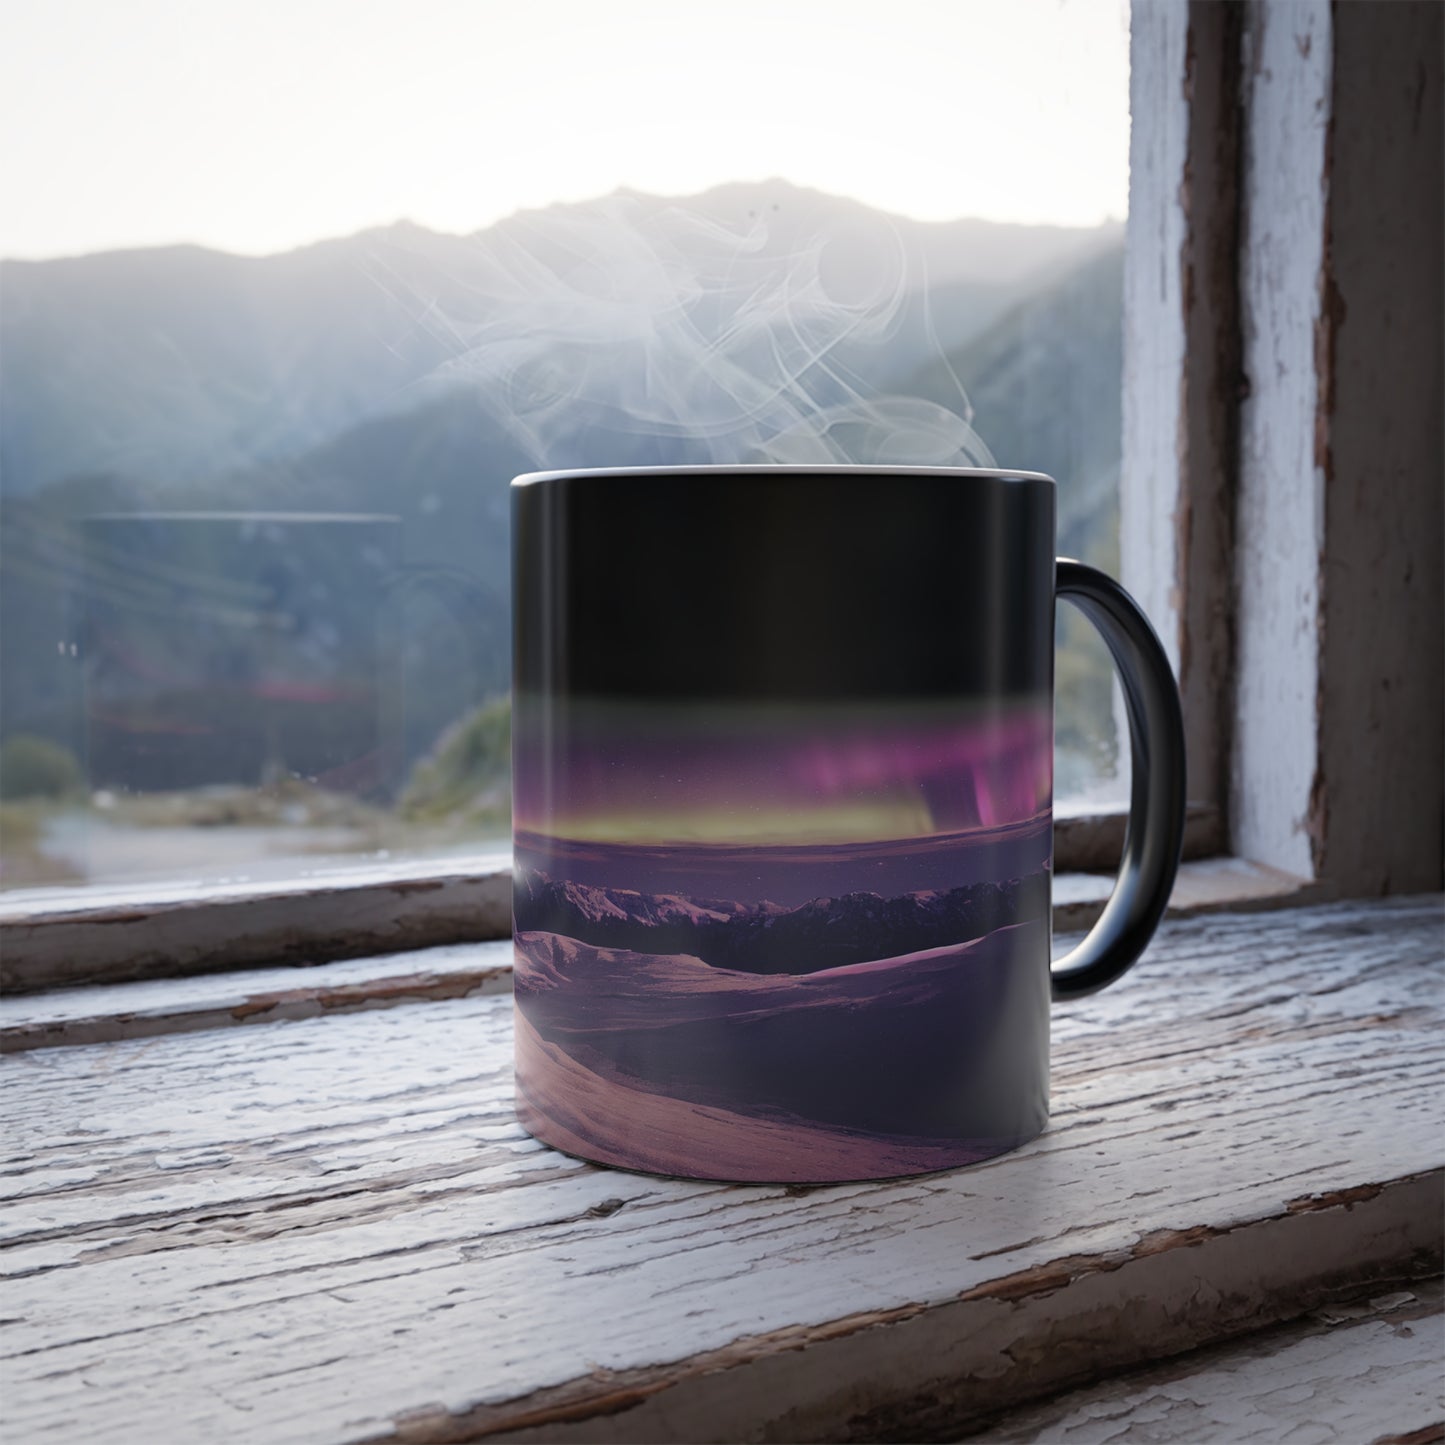 Enchanting Aurora Borealis Heat Sensitive Mug - Northern Lights Magic Color Morphing Mug 11oz - Heat Reactive Night Sky Coffee Cup - Perfect Gift for Nature Lovers 2